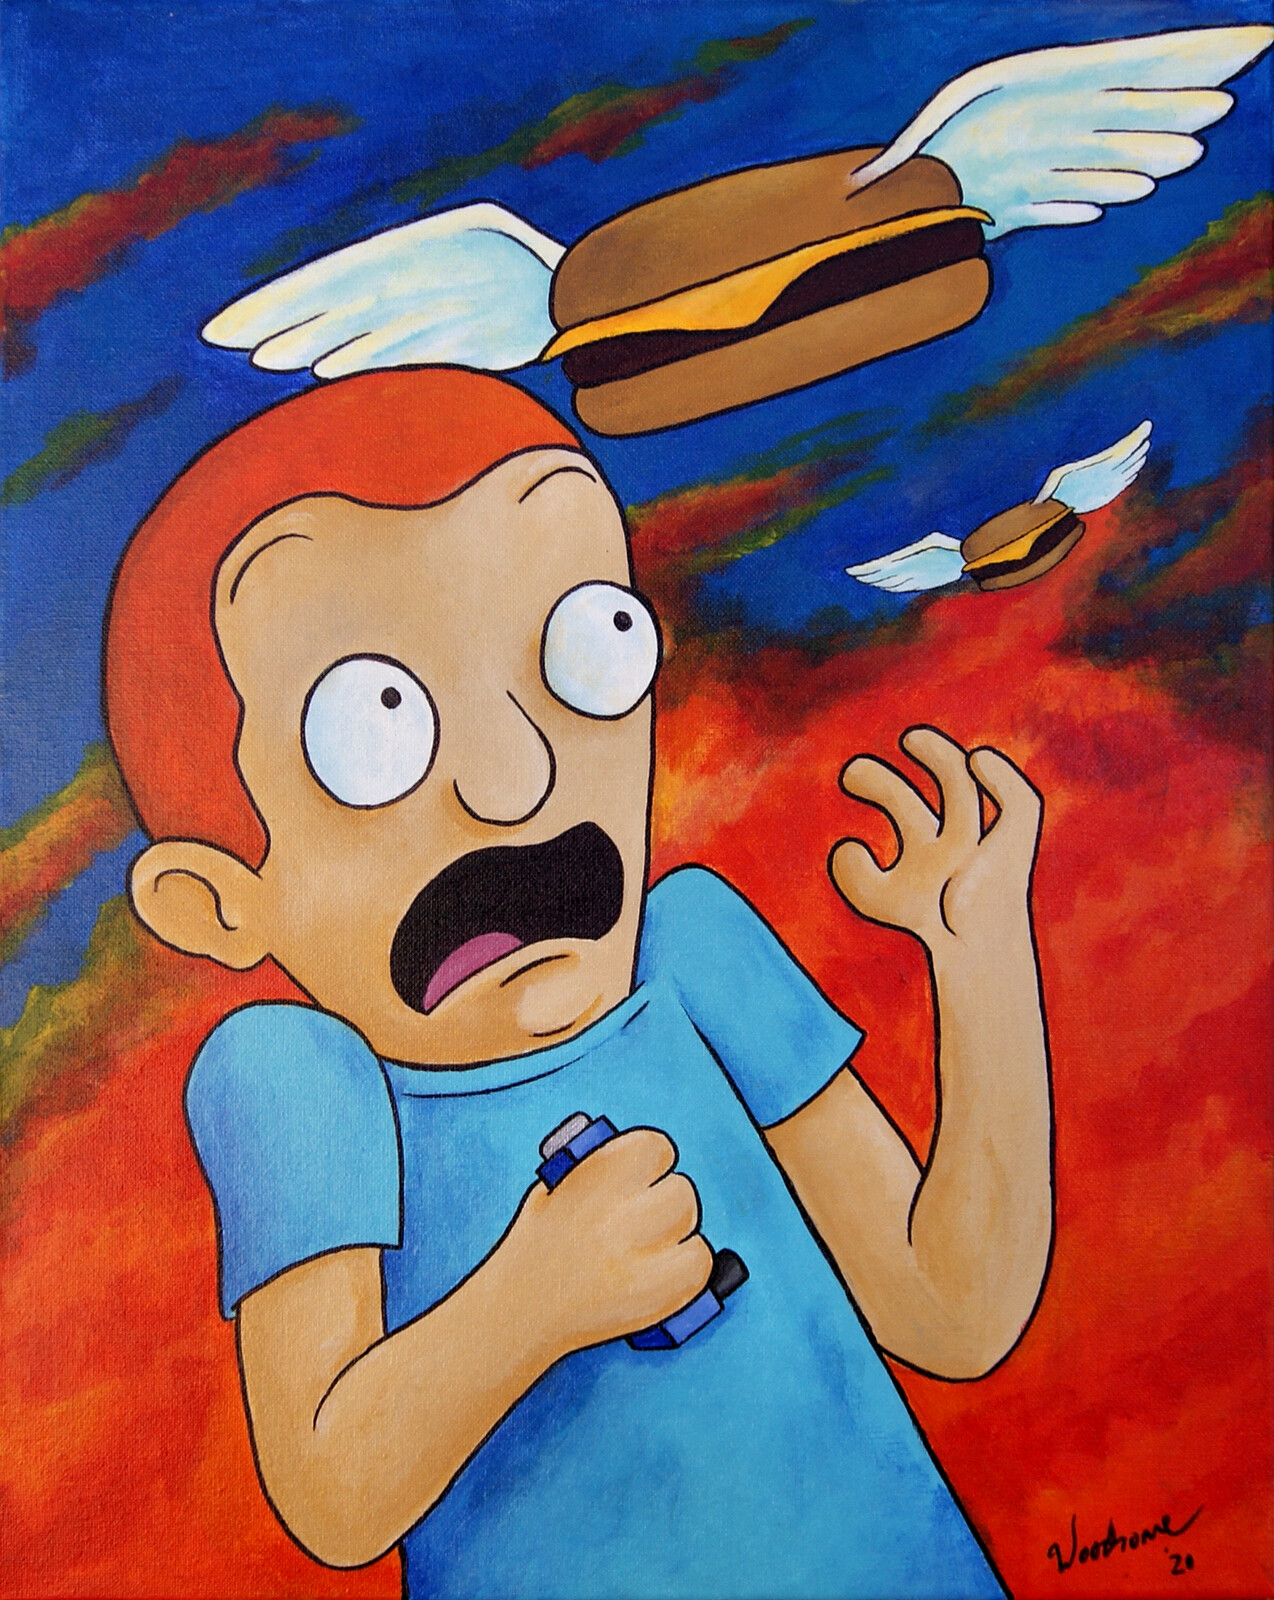 Regular Sized Rudy, Bob's Burgers fan art.